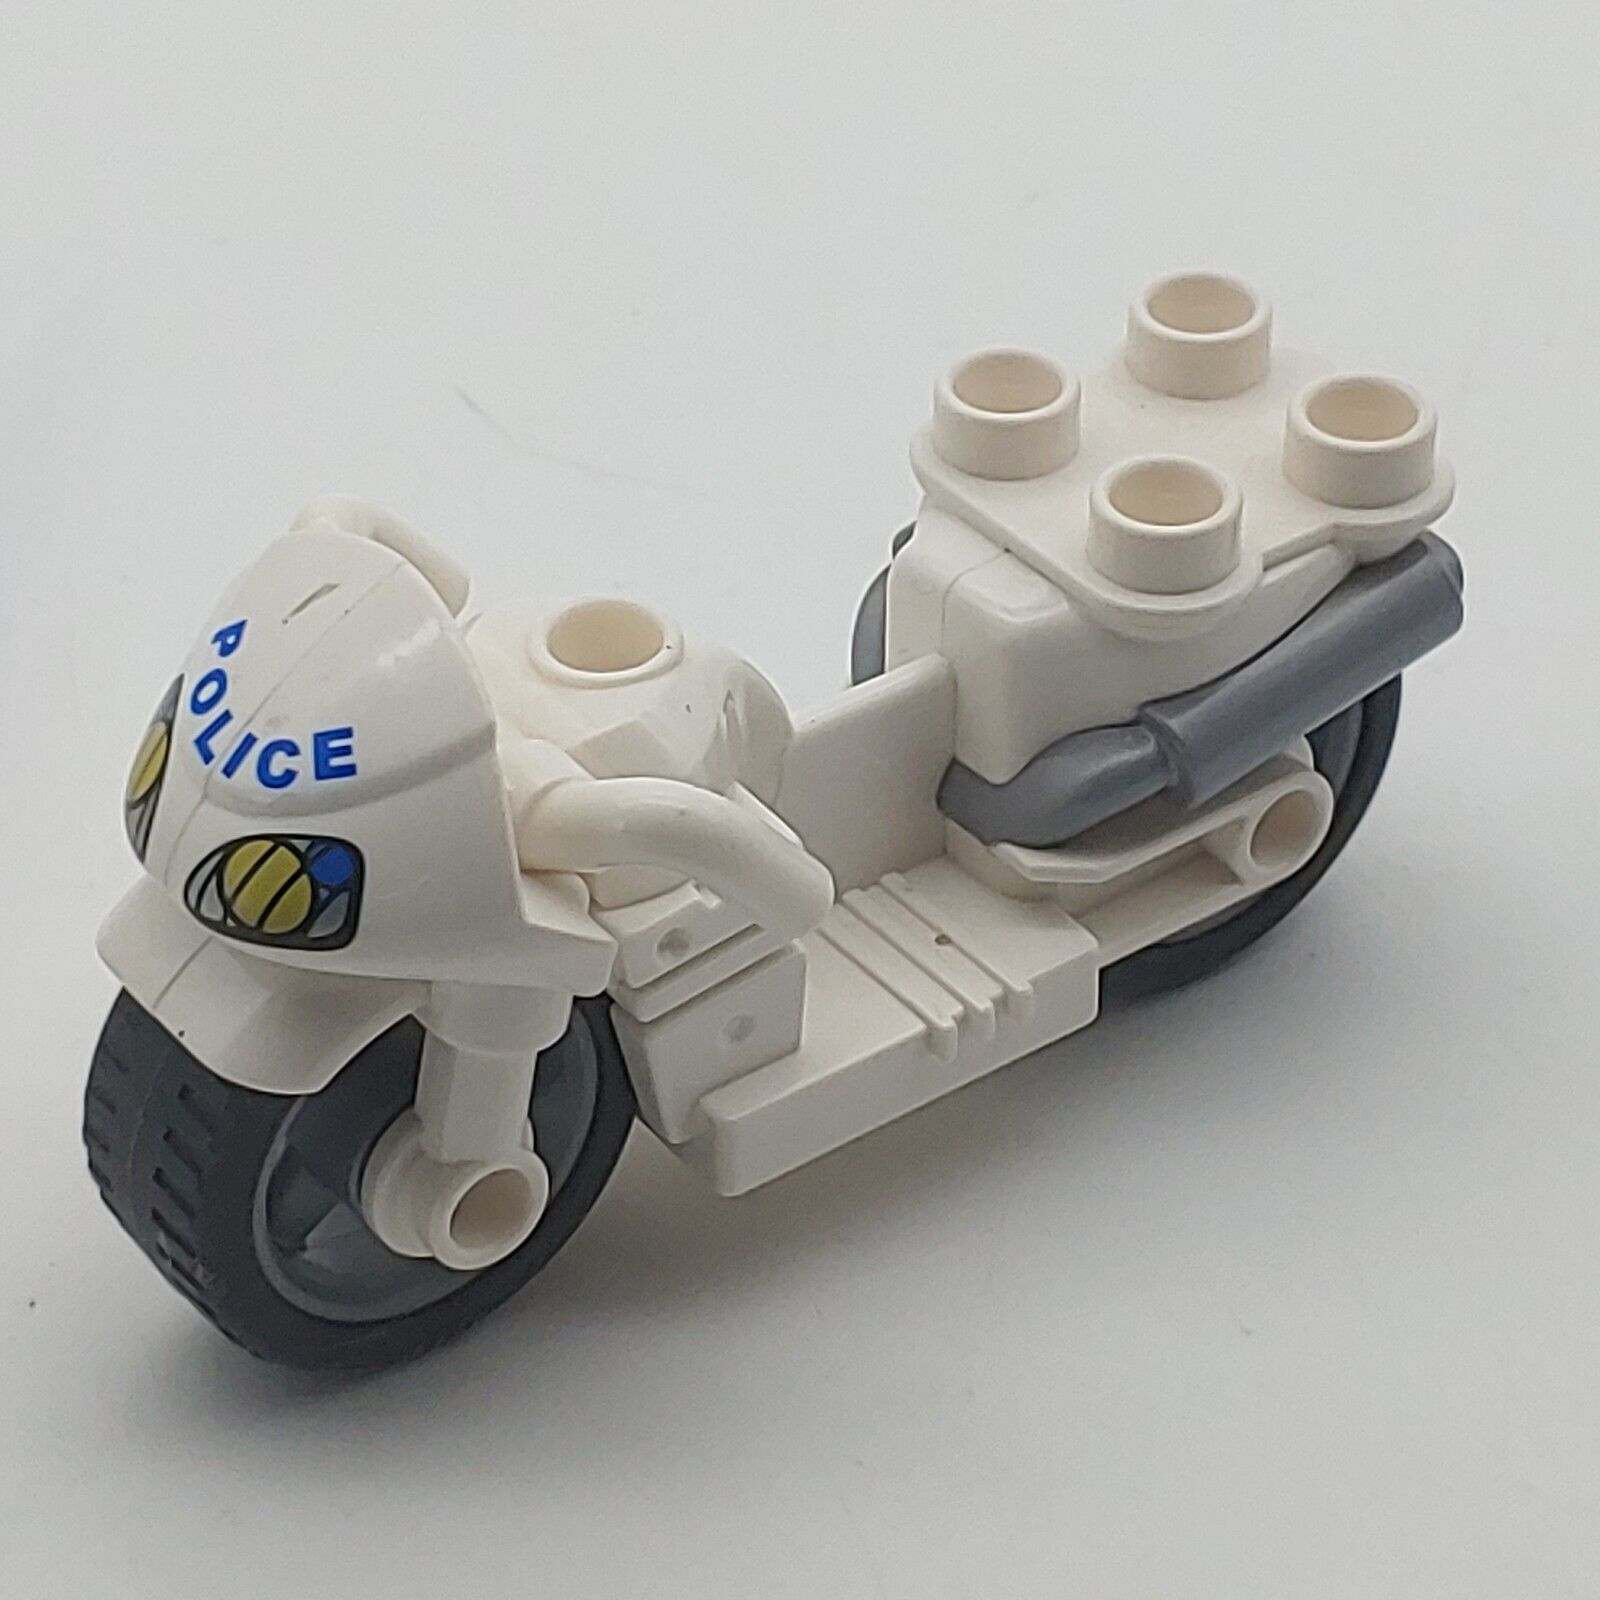 Lego Duplo 3.5" POLICE MOTORCYCLE Motor cycle Legoville City White